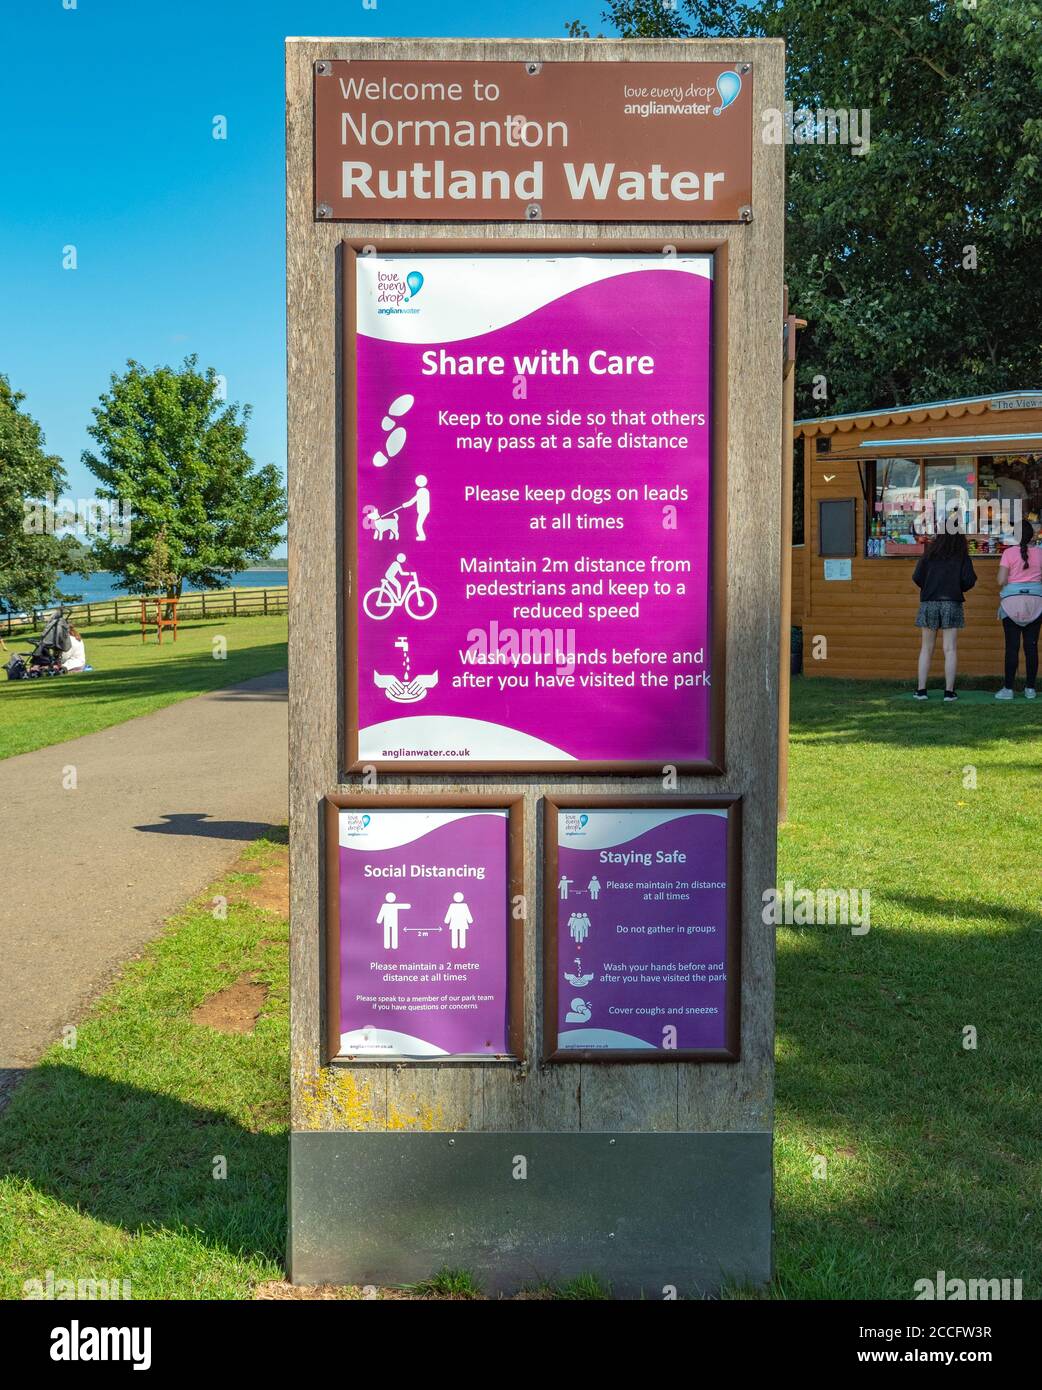 Social distancing notice board (during coronavirus / covid-19 pandemic) in summer sunshine. Rutland Water, Normanton, England, UK. Stock Photo